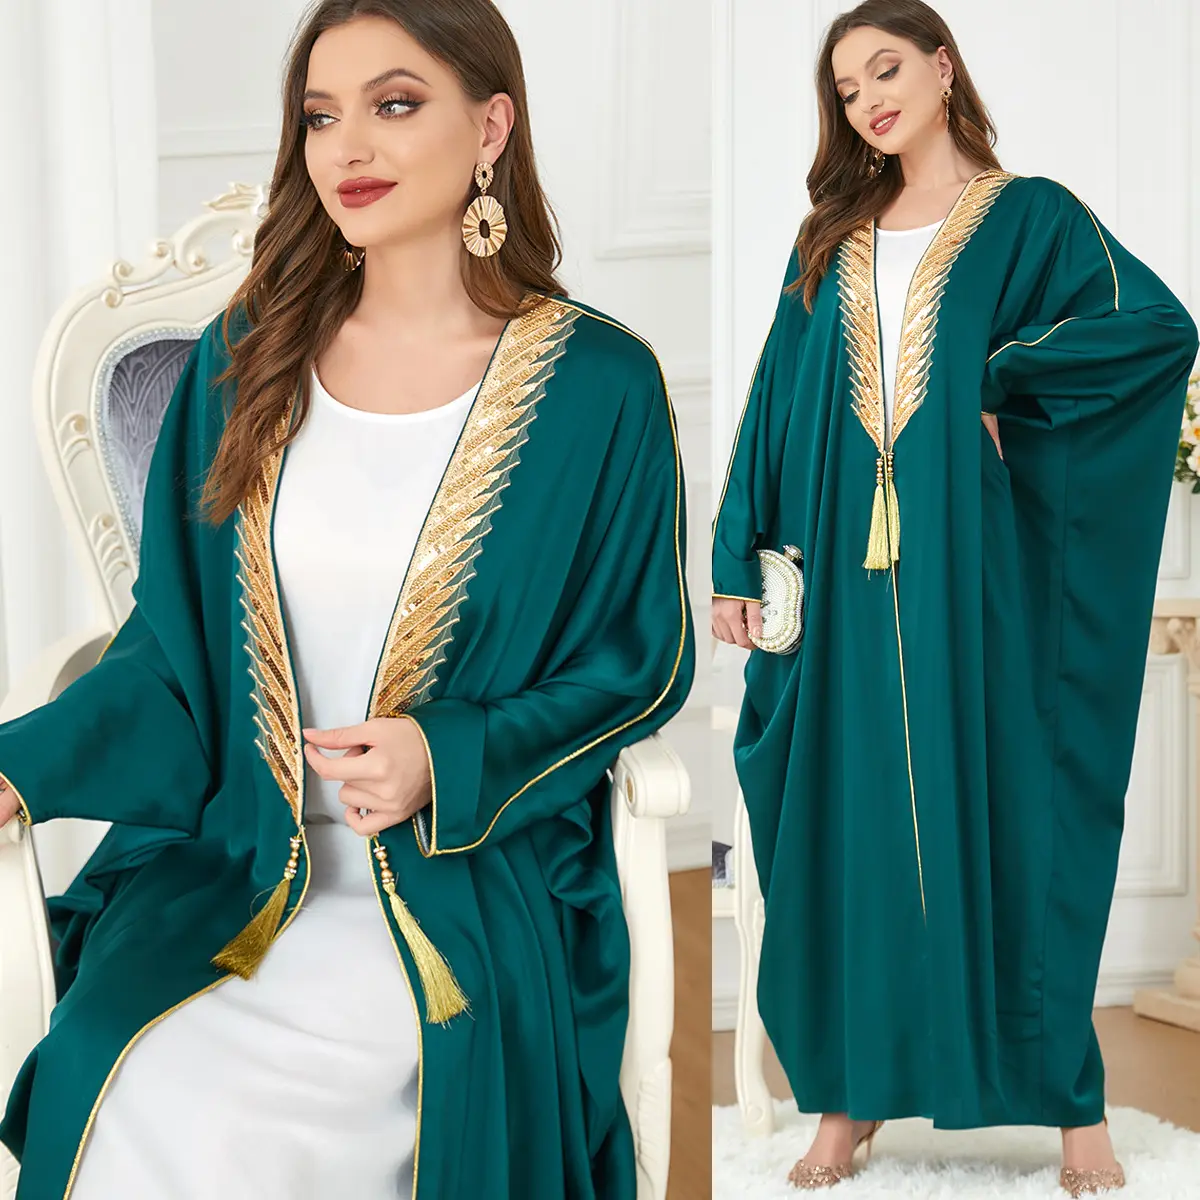 Moyen-Orient Robe musulmane Satin manches chauve-souris robes vert émeraude robe de soirée musulmane couleur unie Abaya dubaï robes musulmanes